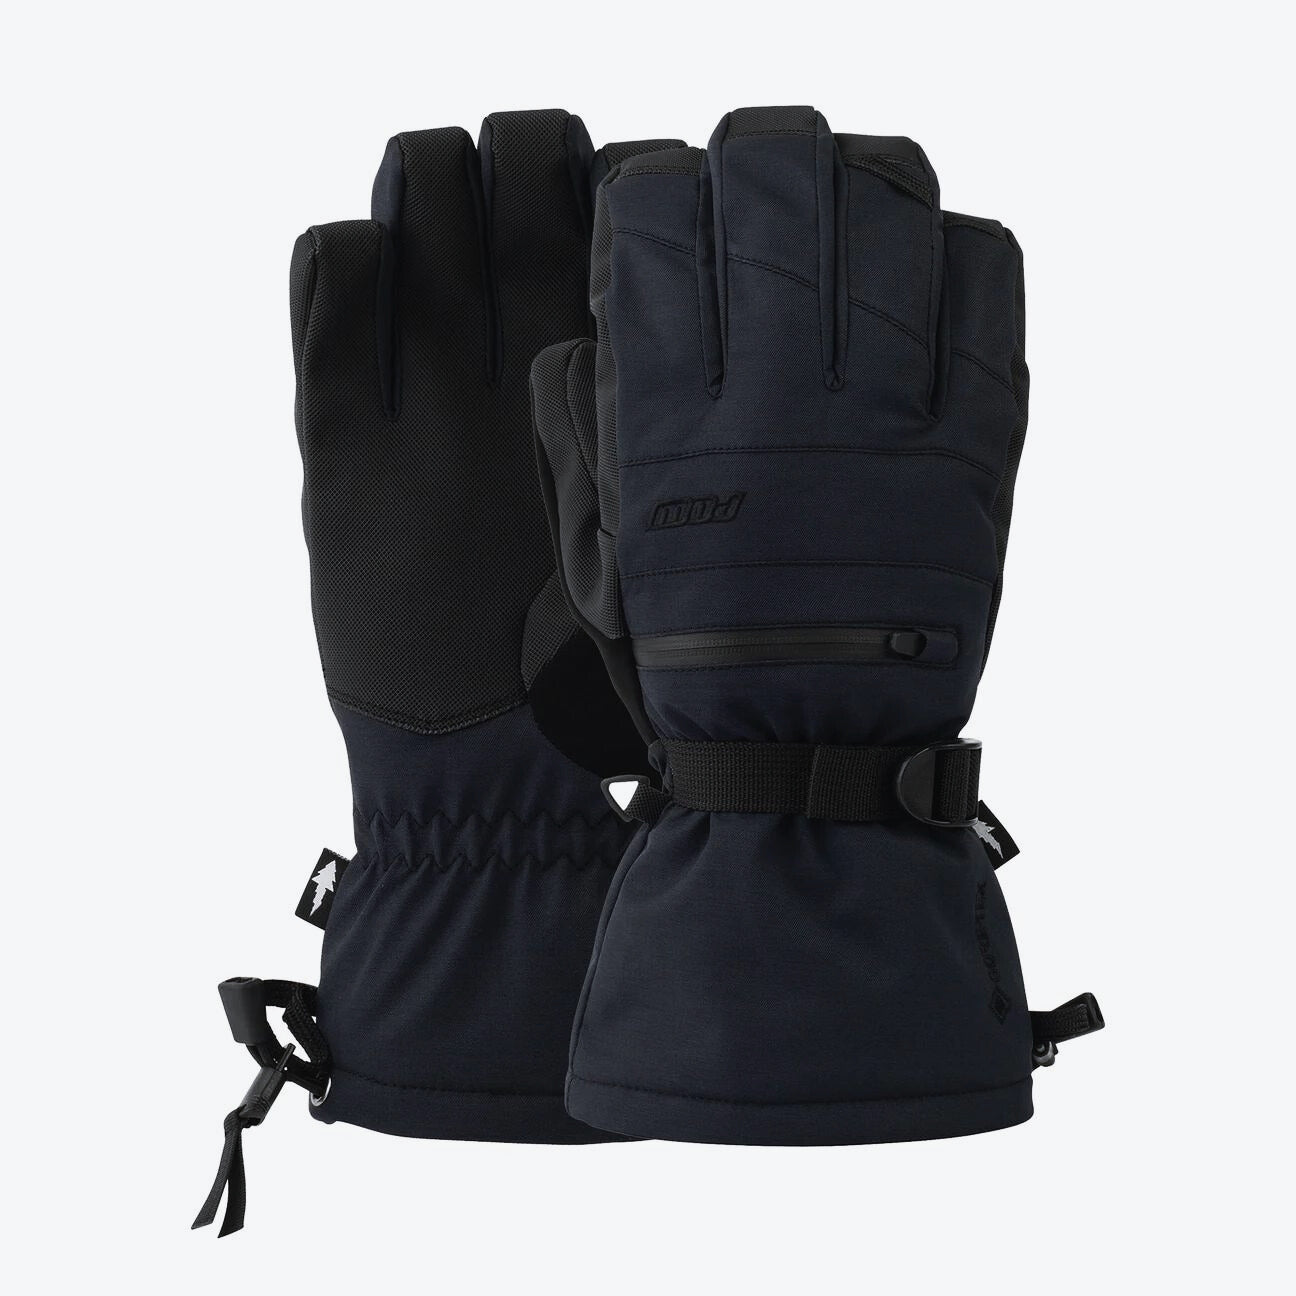 POW Wayback GTX Short Glove + Warm - Guanti Snowboard Uomo - Neverland Firenze